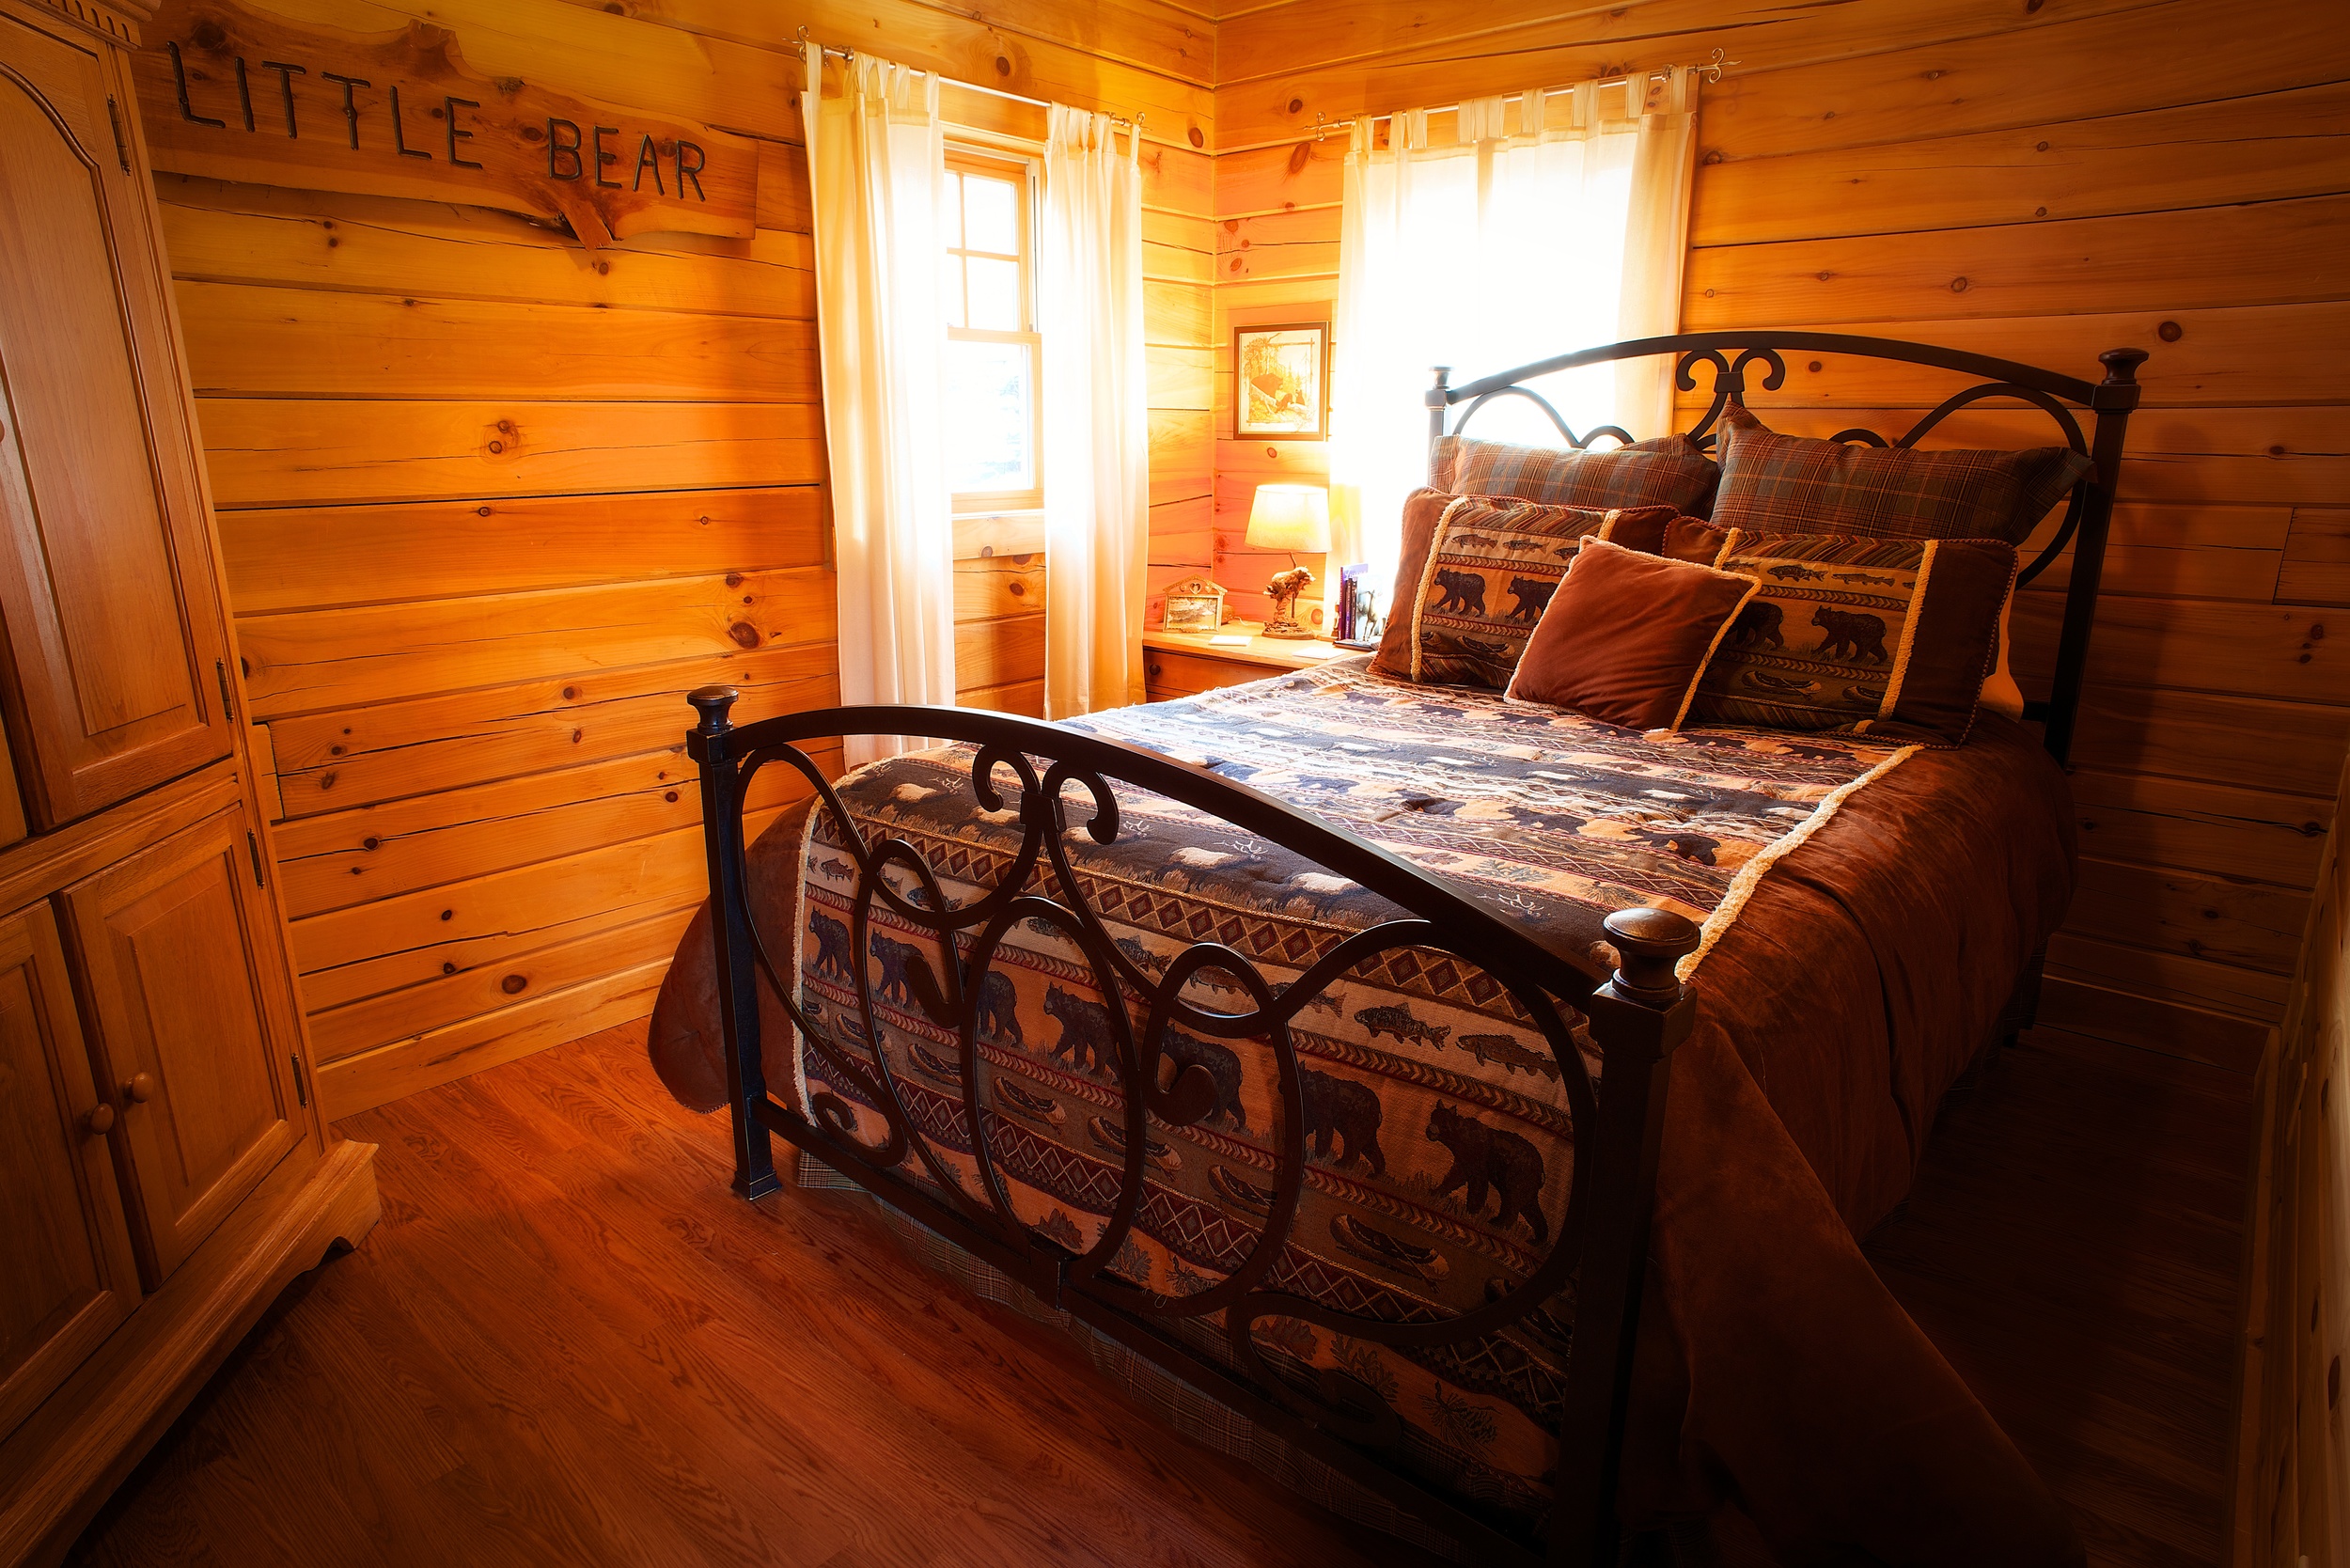 Branson_Bear_Log_Cabin_Little_Bear_bedroom.jpg